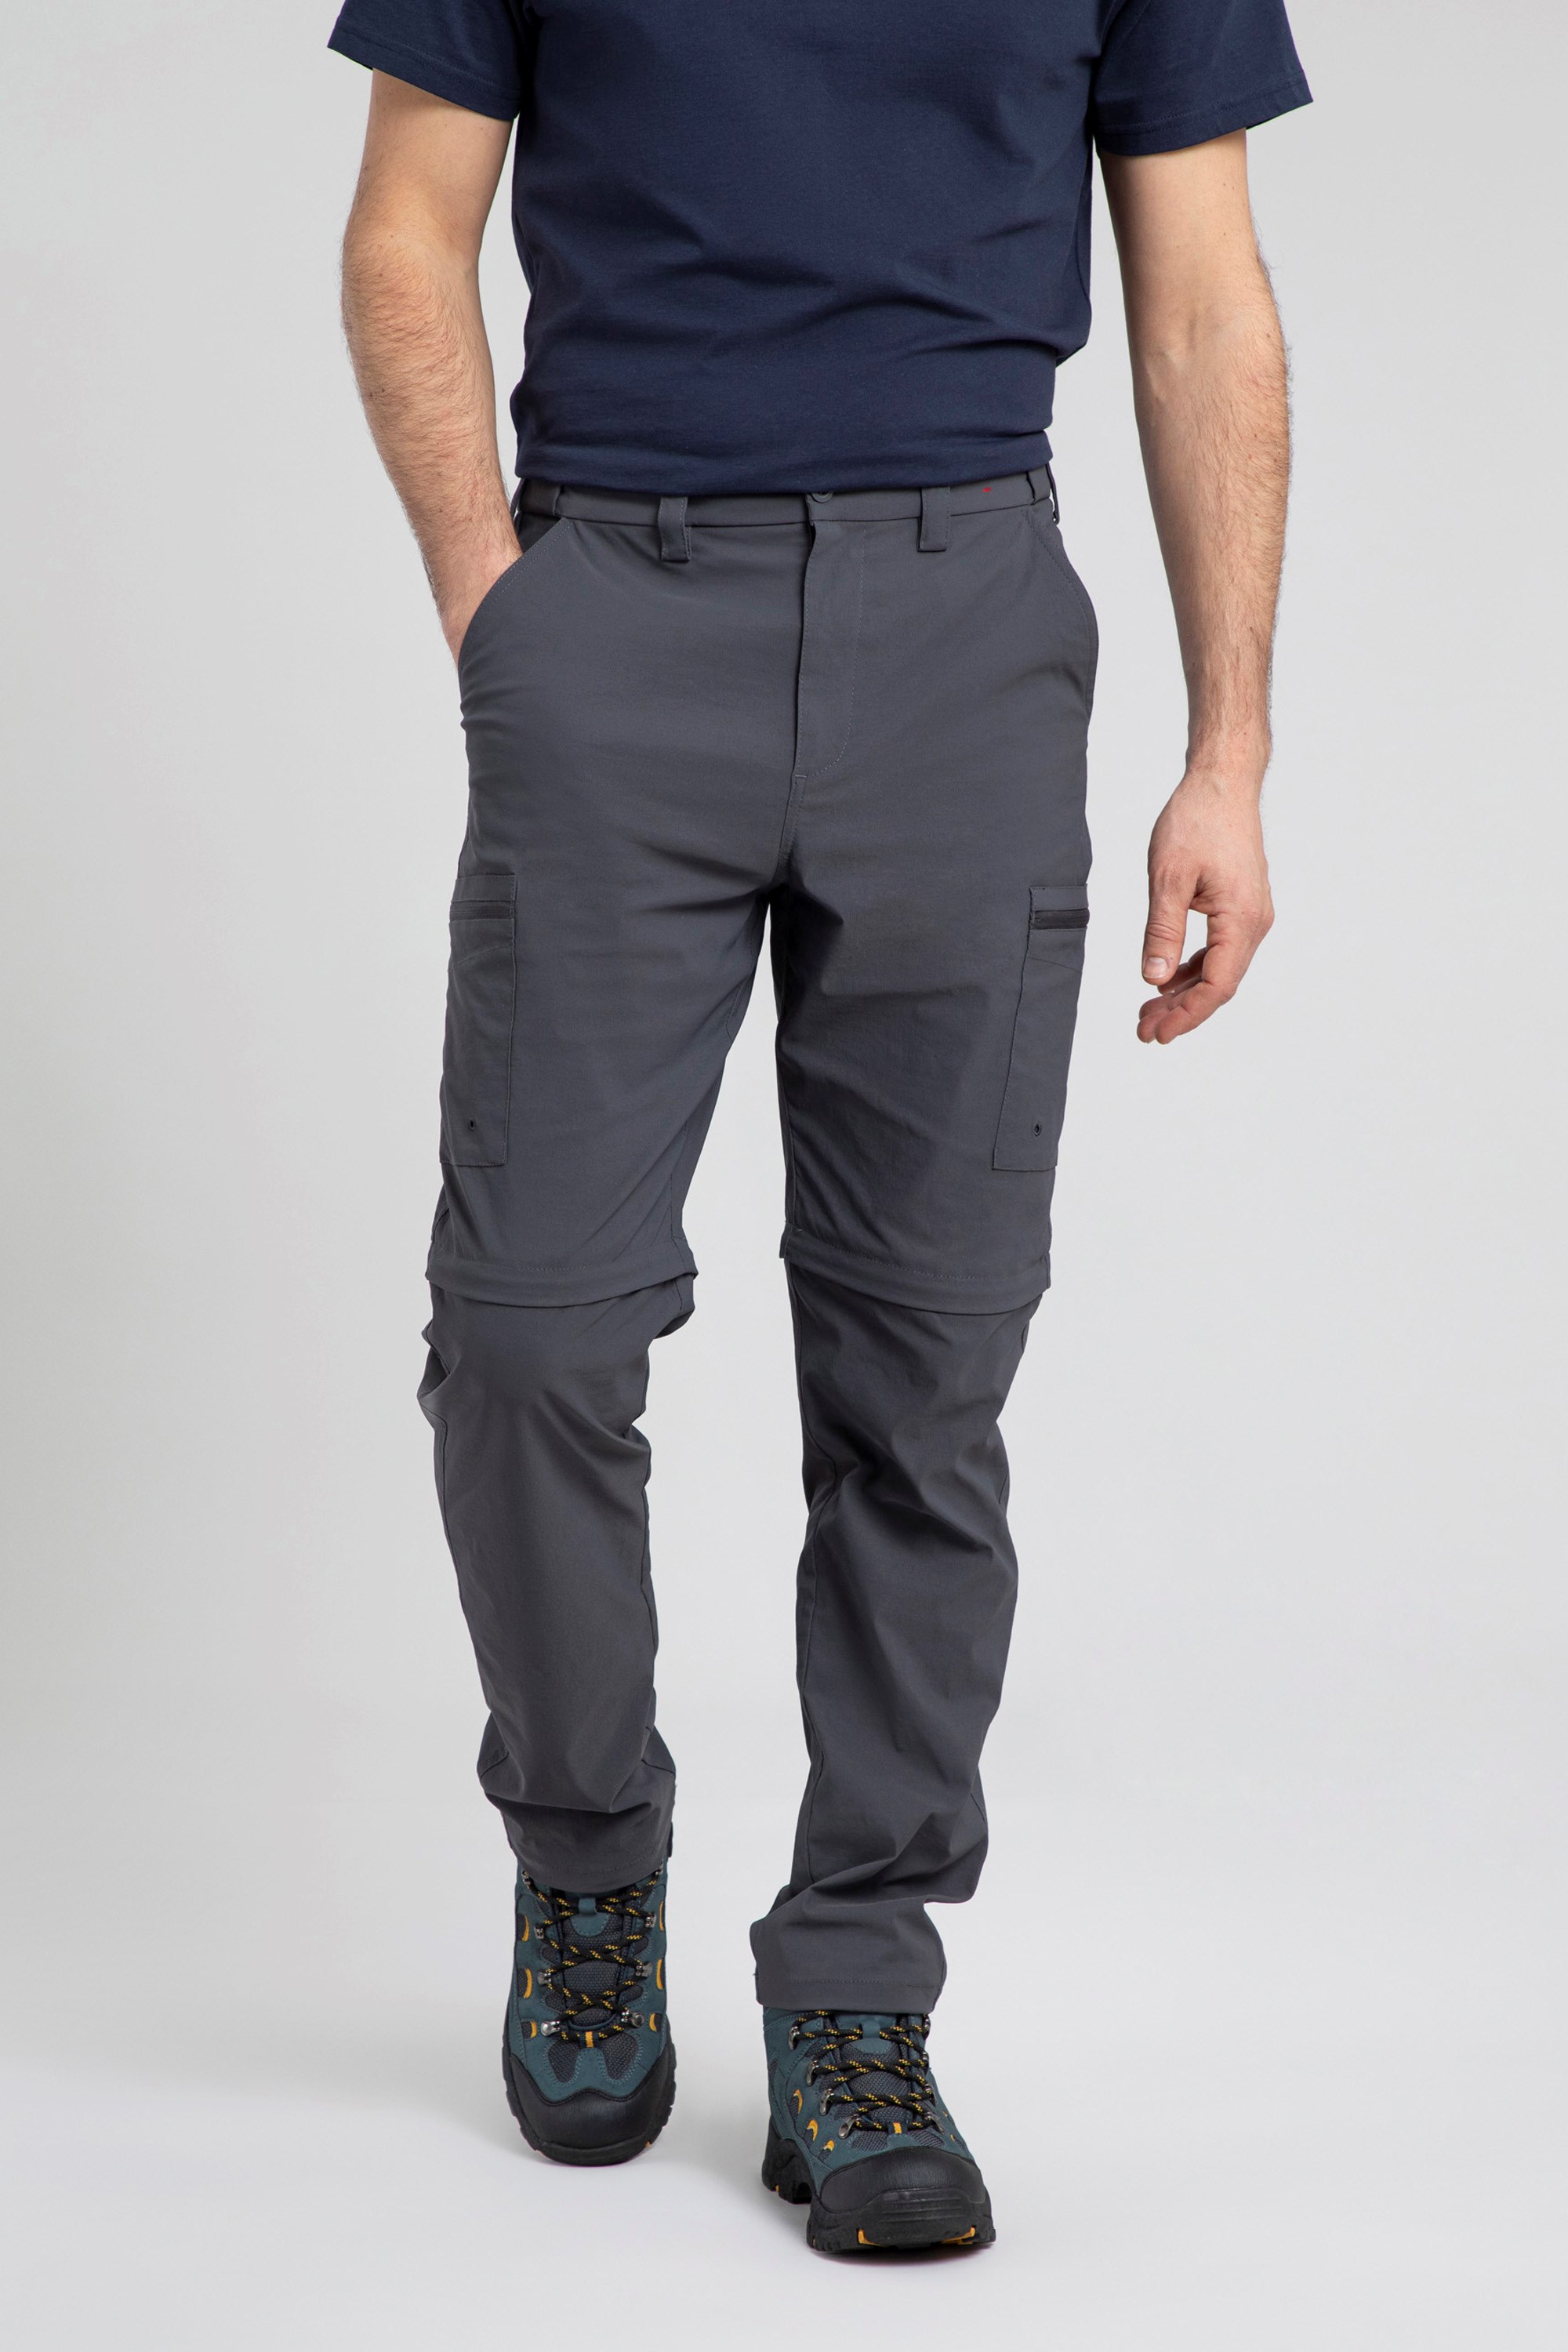 Trek Stretch Convertible Mens Trousers - Grey